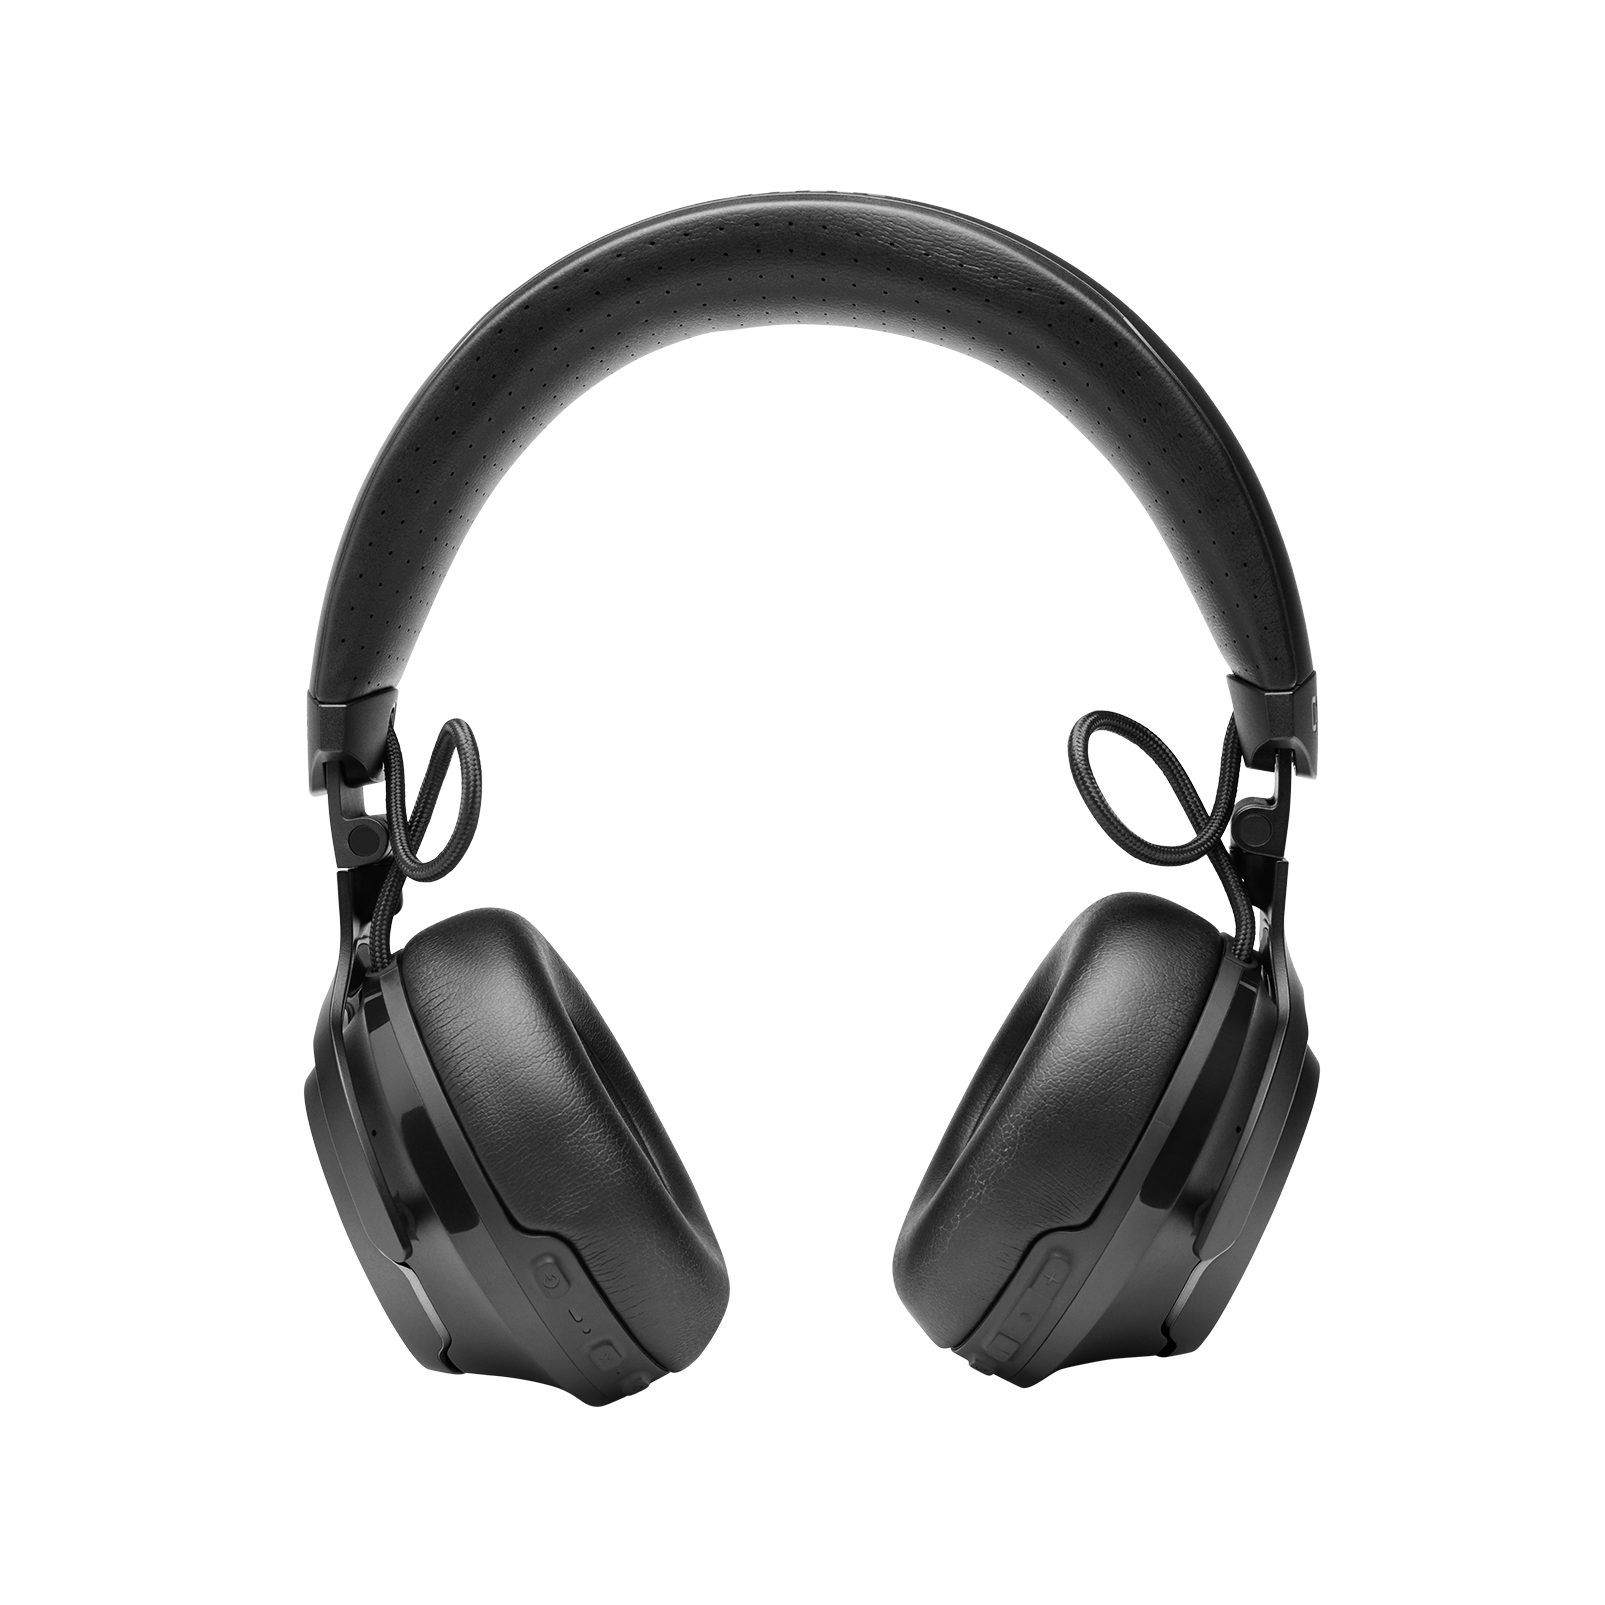 JBL Club 700BT - Black - Wireless on-ear headphones - Back